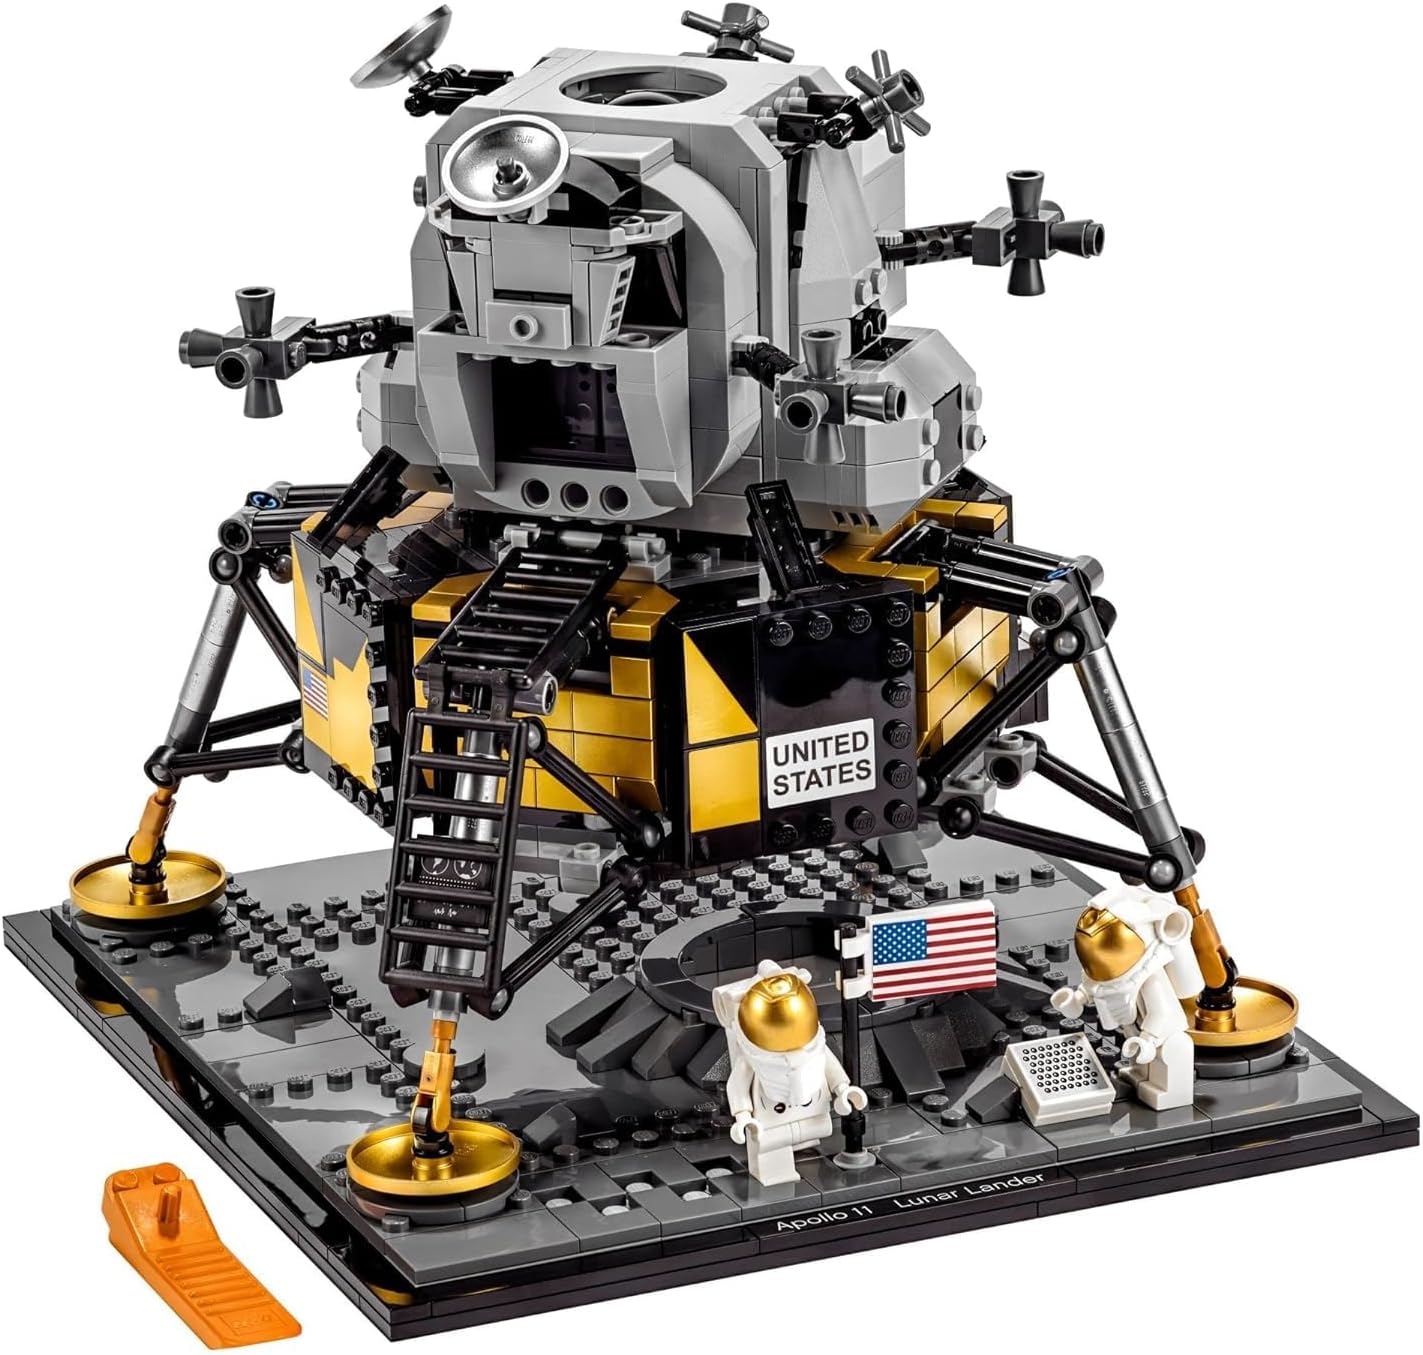 Lego Creator Expert N.A.S.A Apollo 11 Lunar Lander 10266 Building Kit, 1,087 Pieces